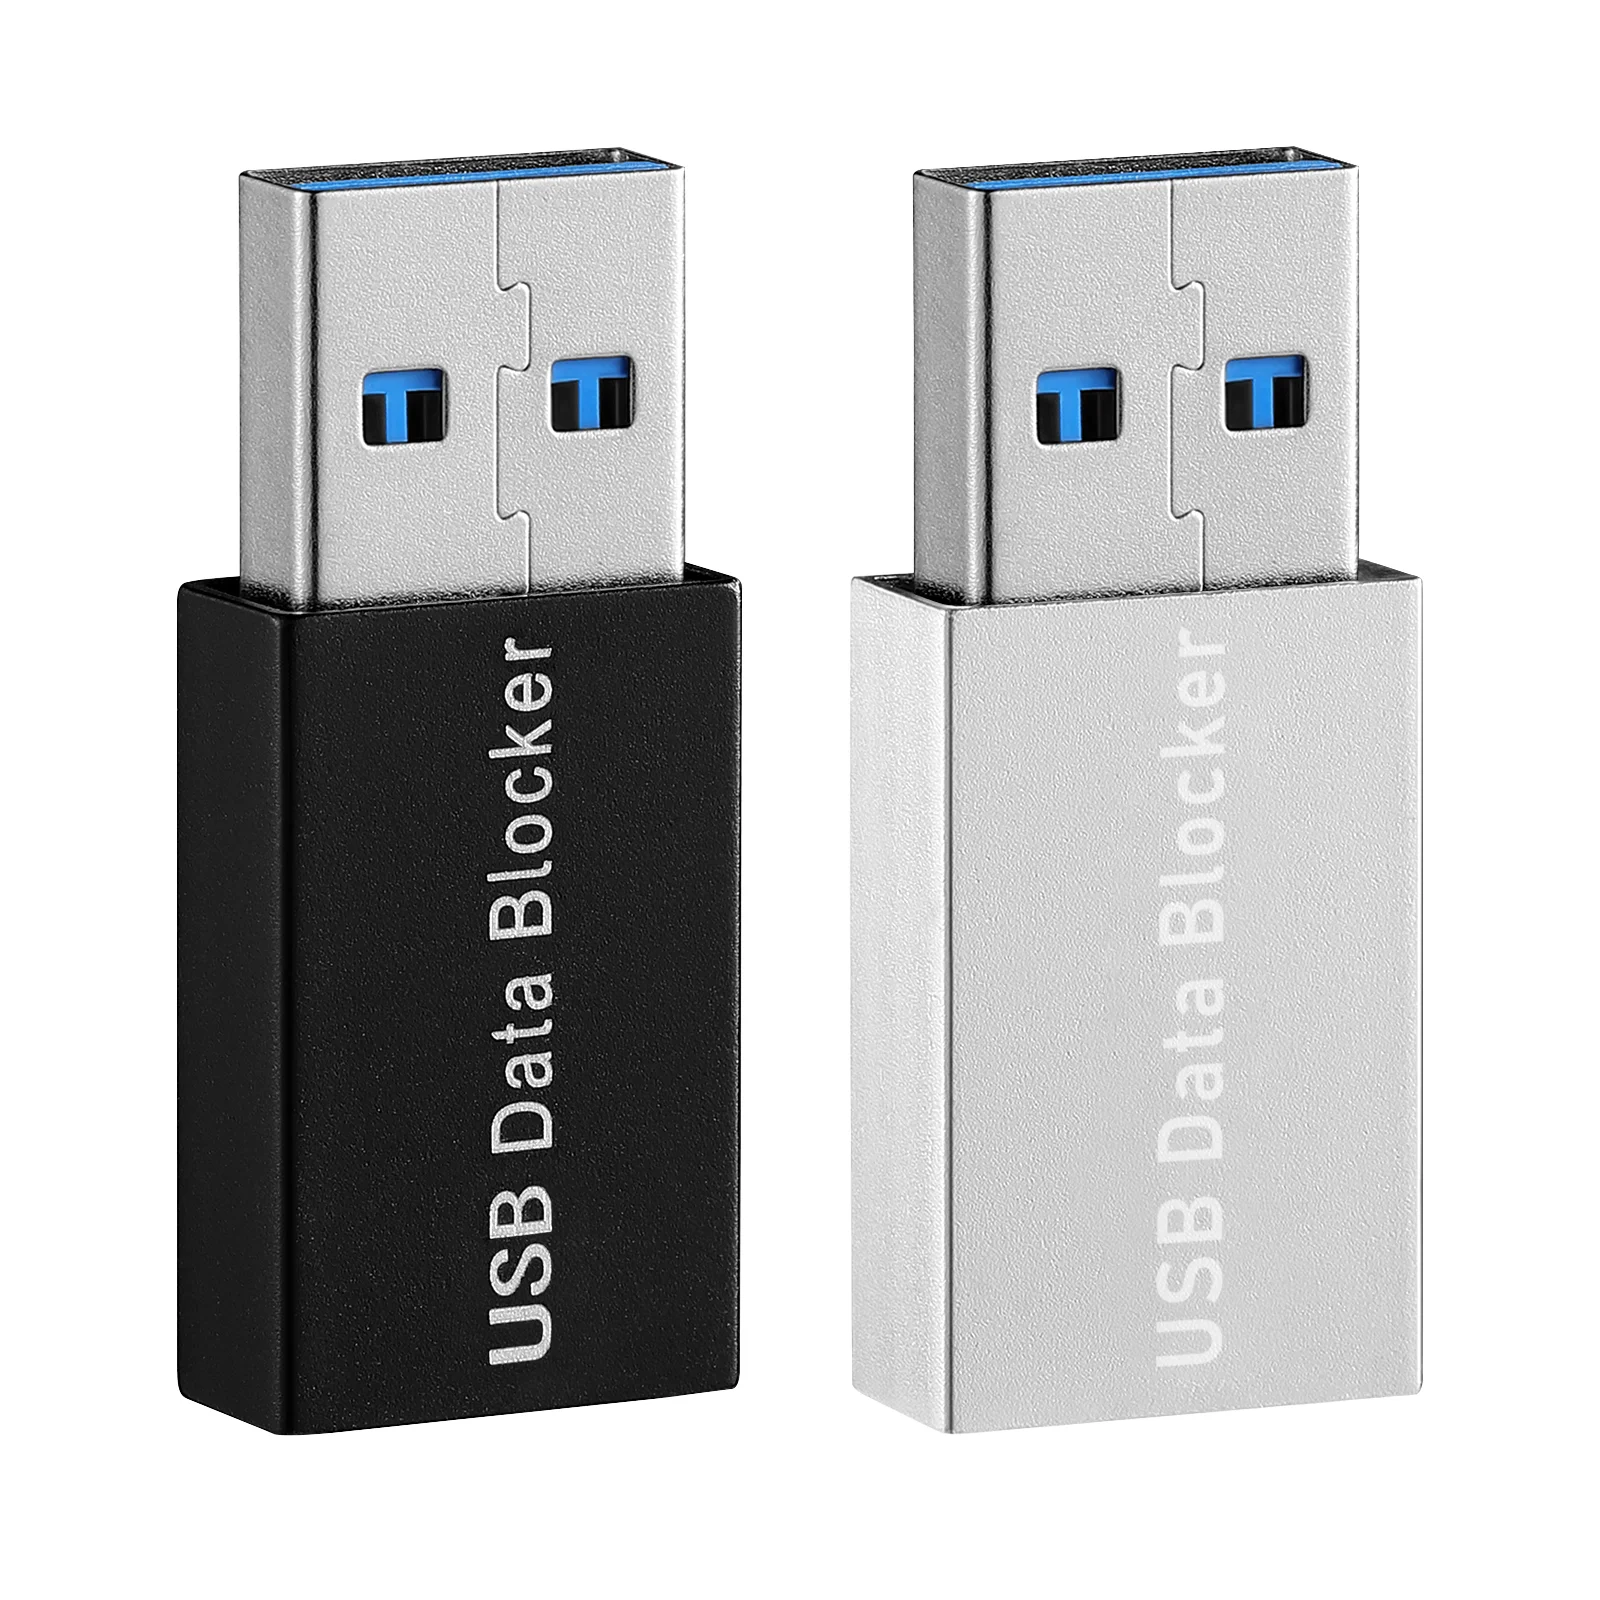 

2pcs Convenient Anti Hacking Data Sync Blockers USB Defenders USB Data Blockers for Travel Trip